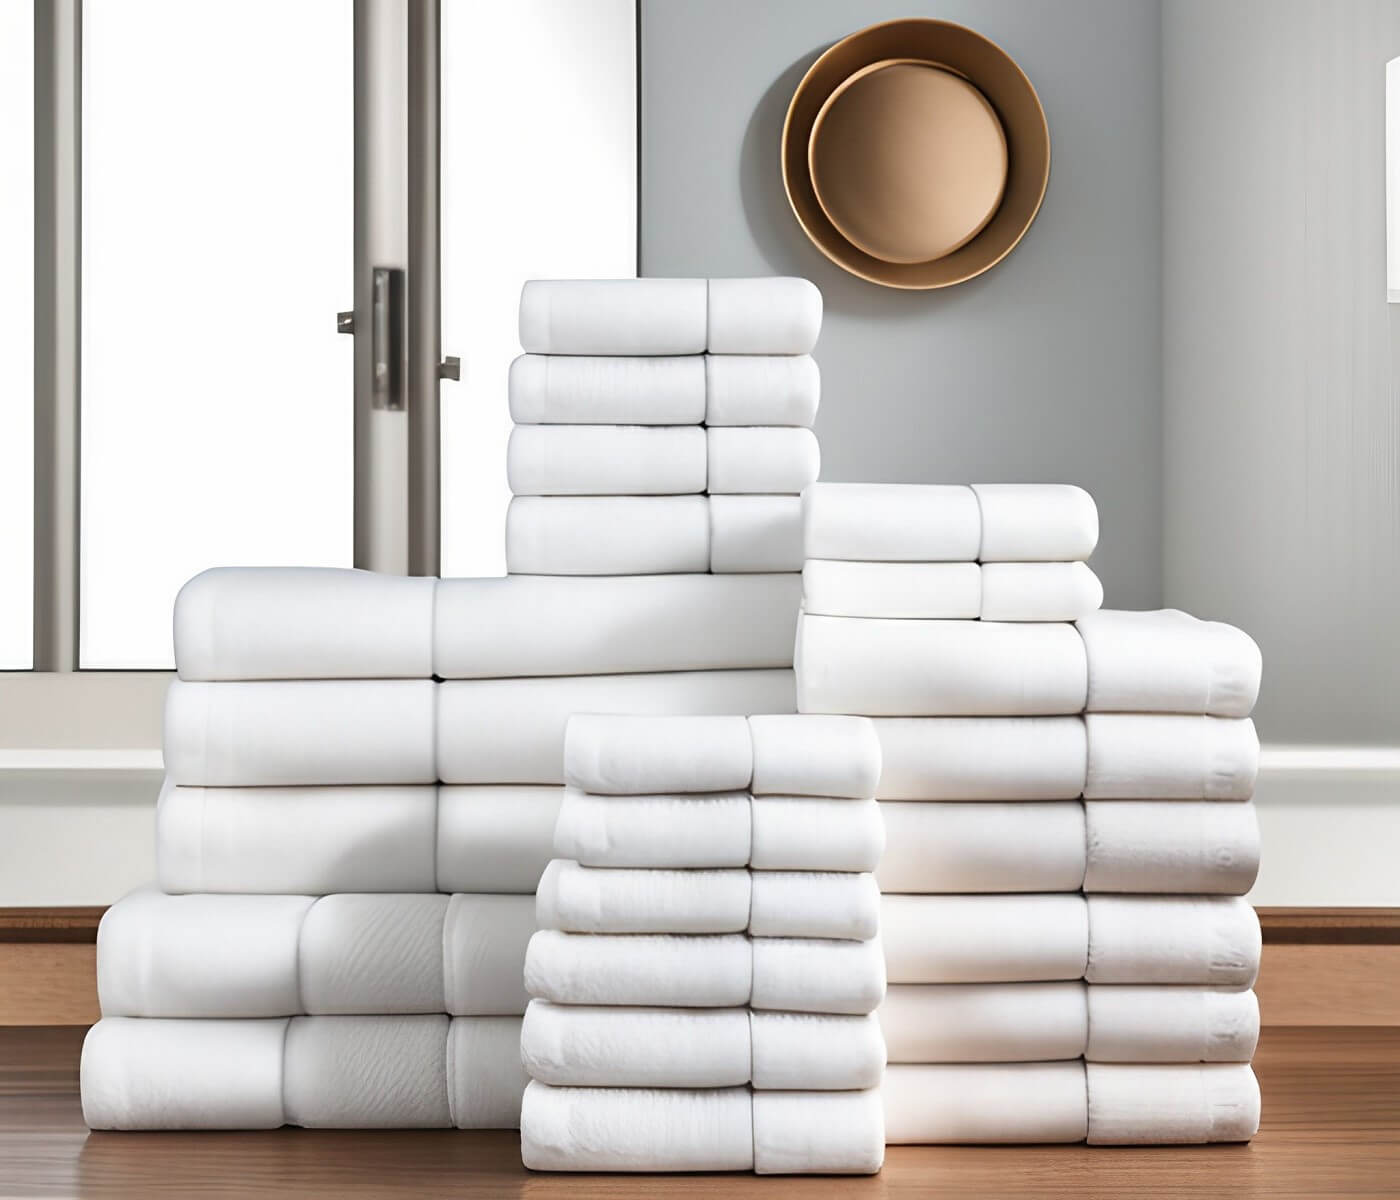 Characteristics of the Best Bulk Towels